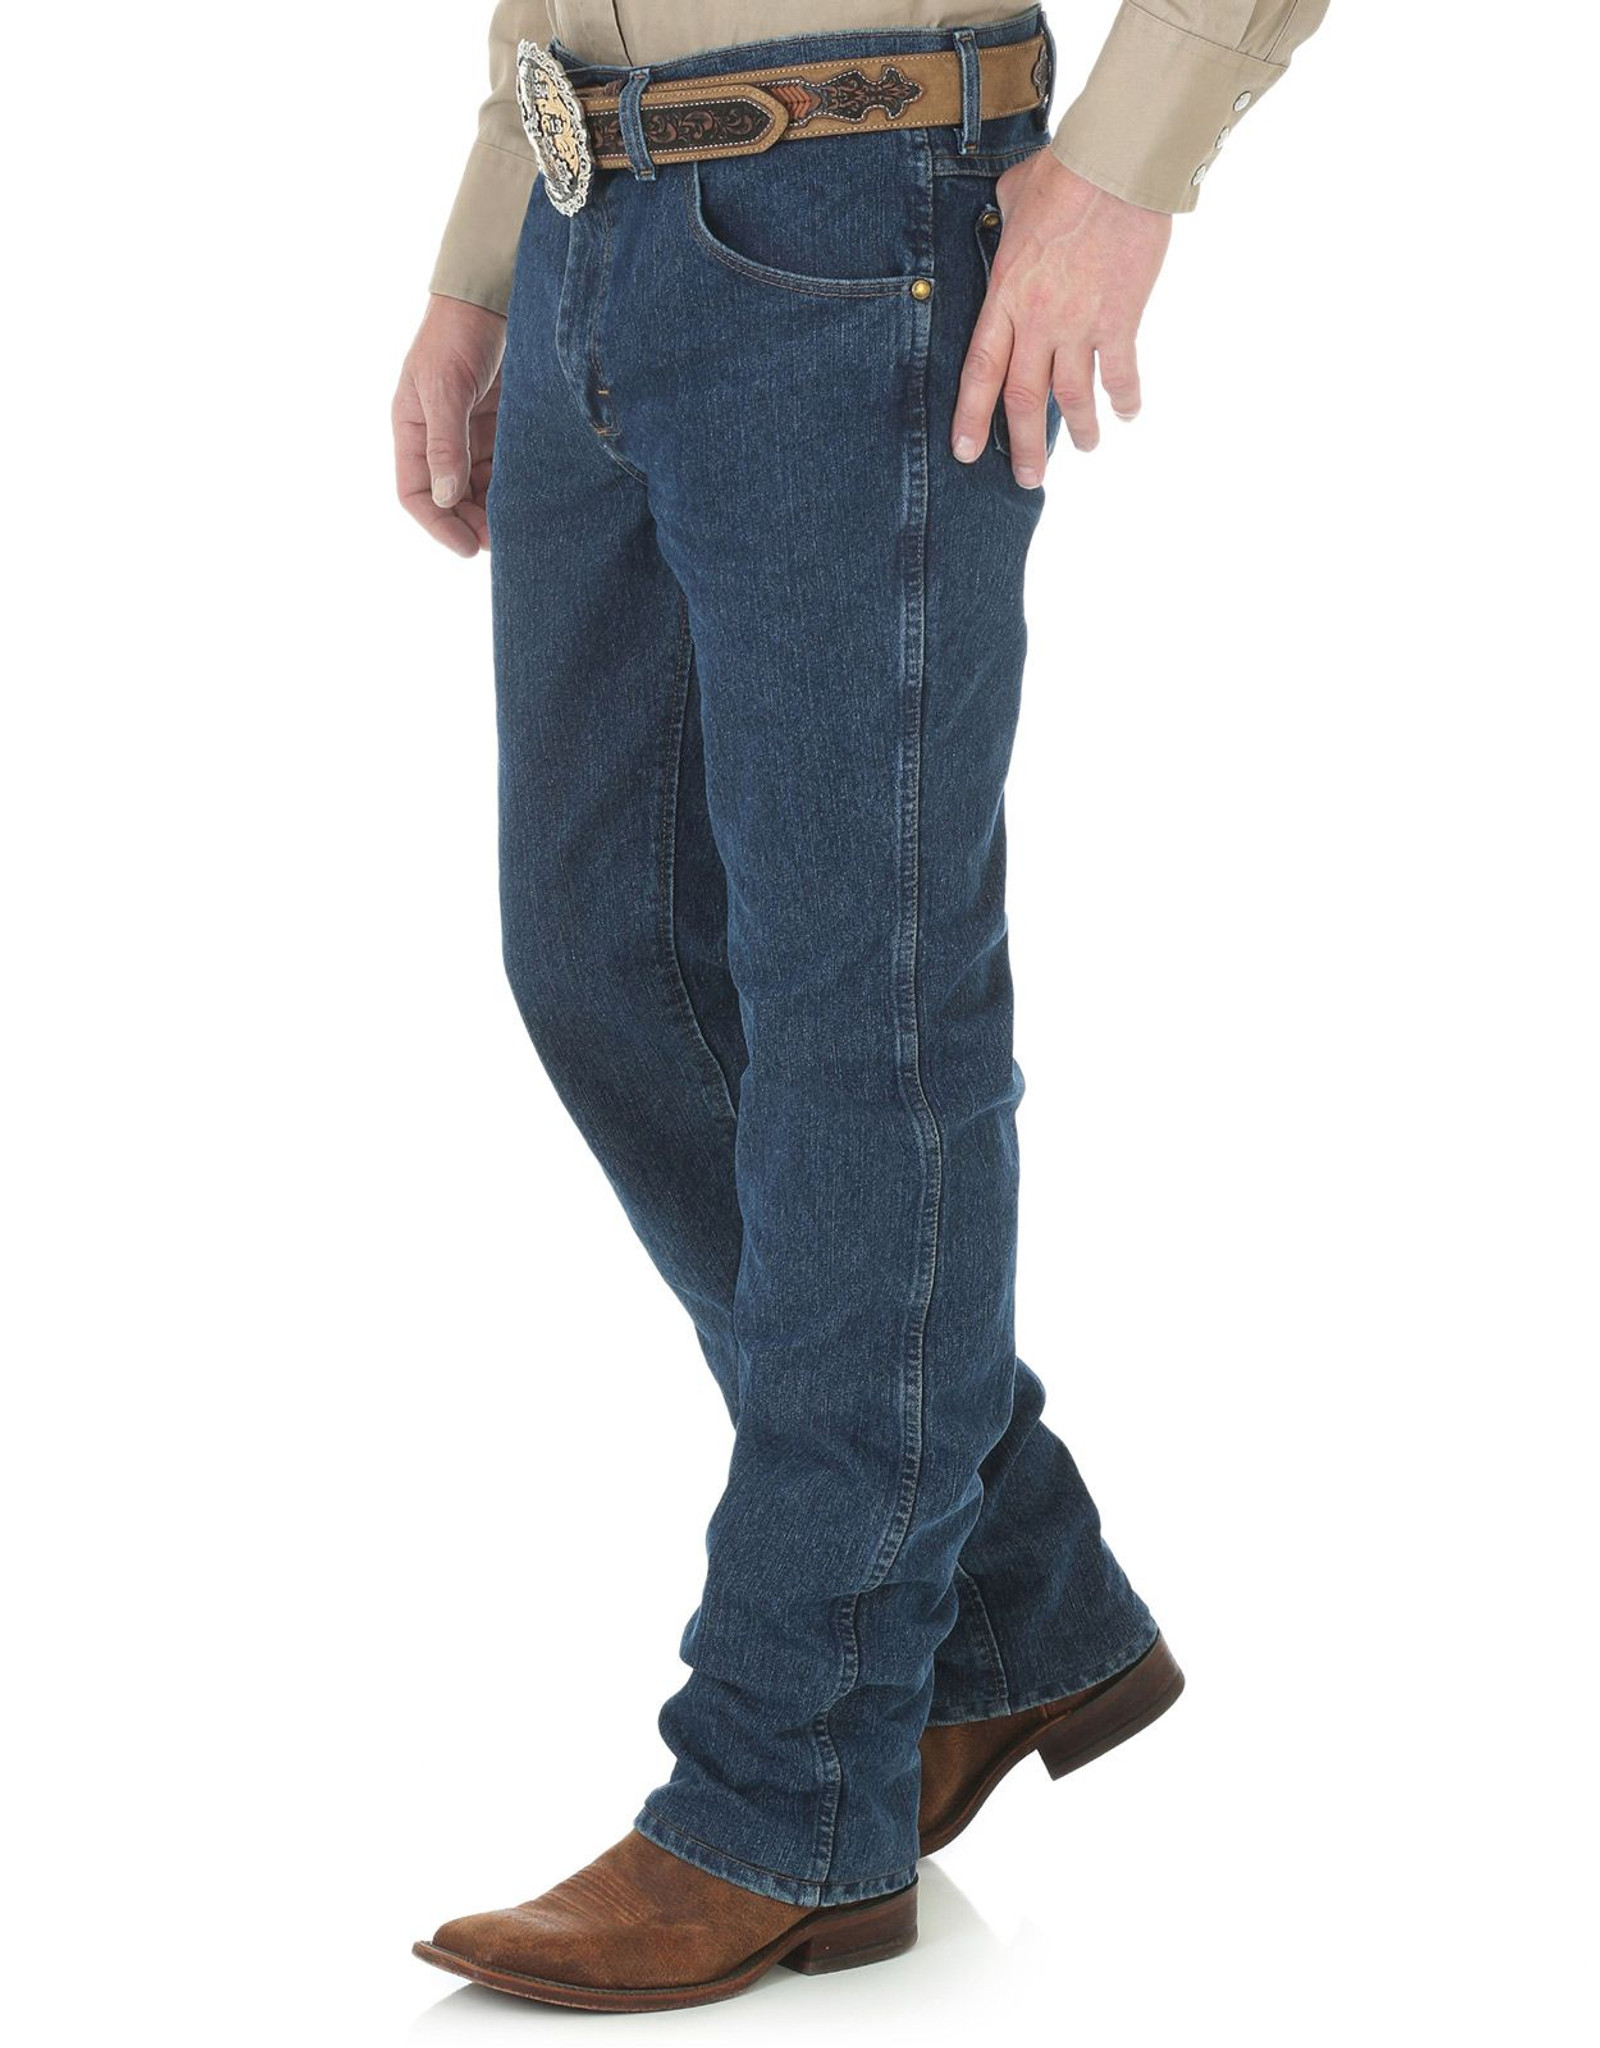 Wrangler Men\'s 36MACMS Jeans from Langston\'s - Mid Stone